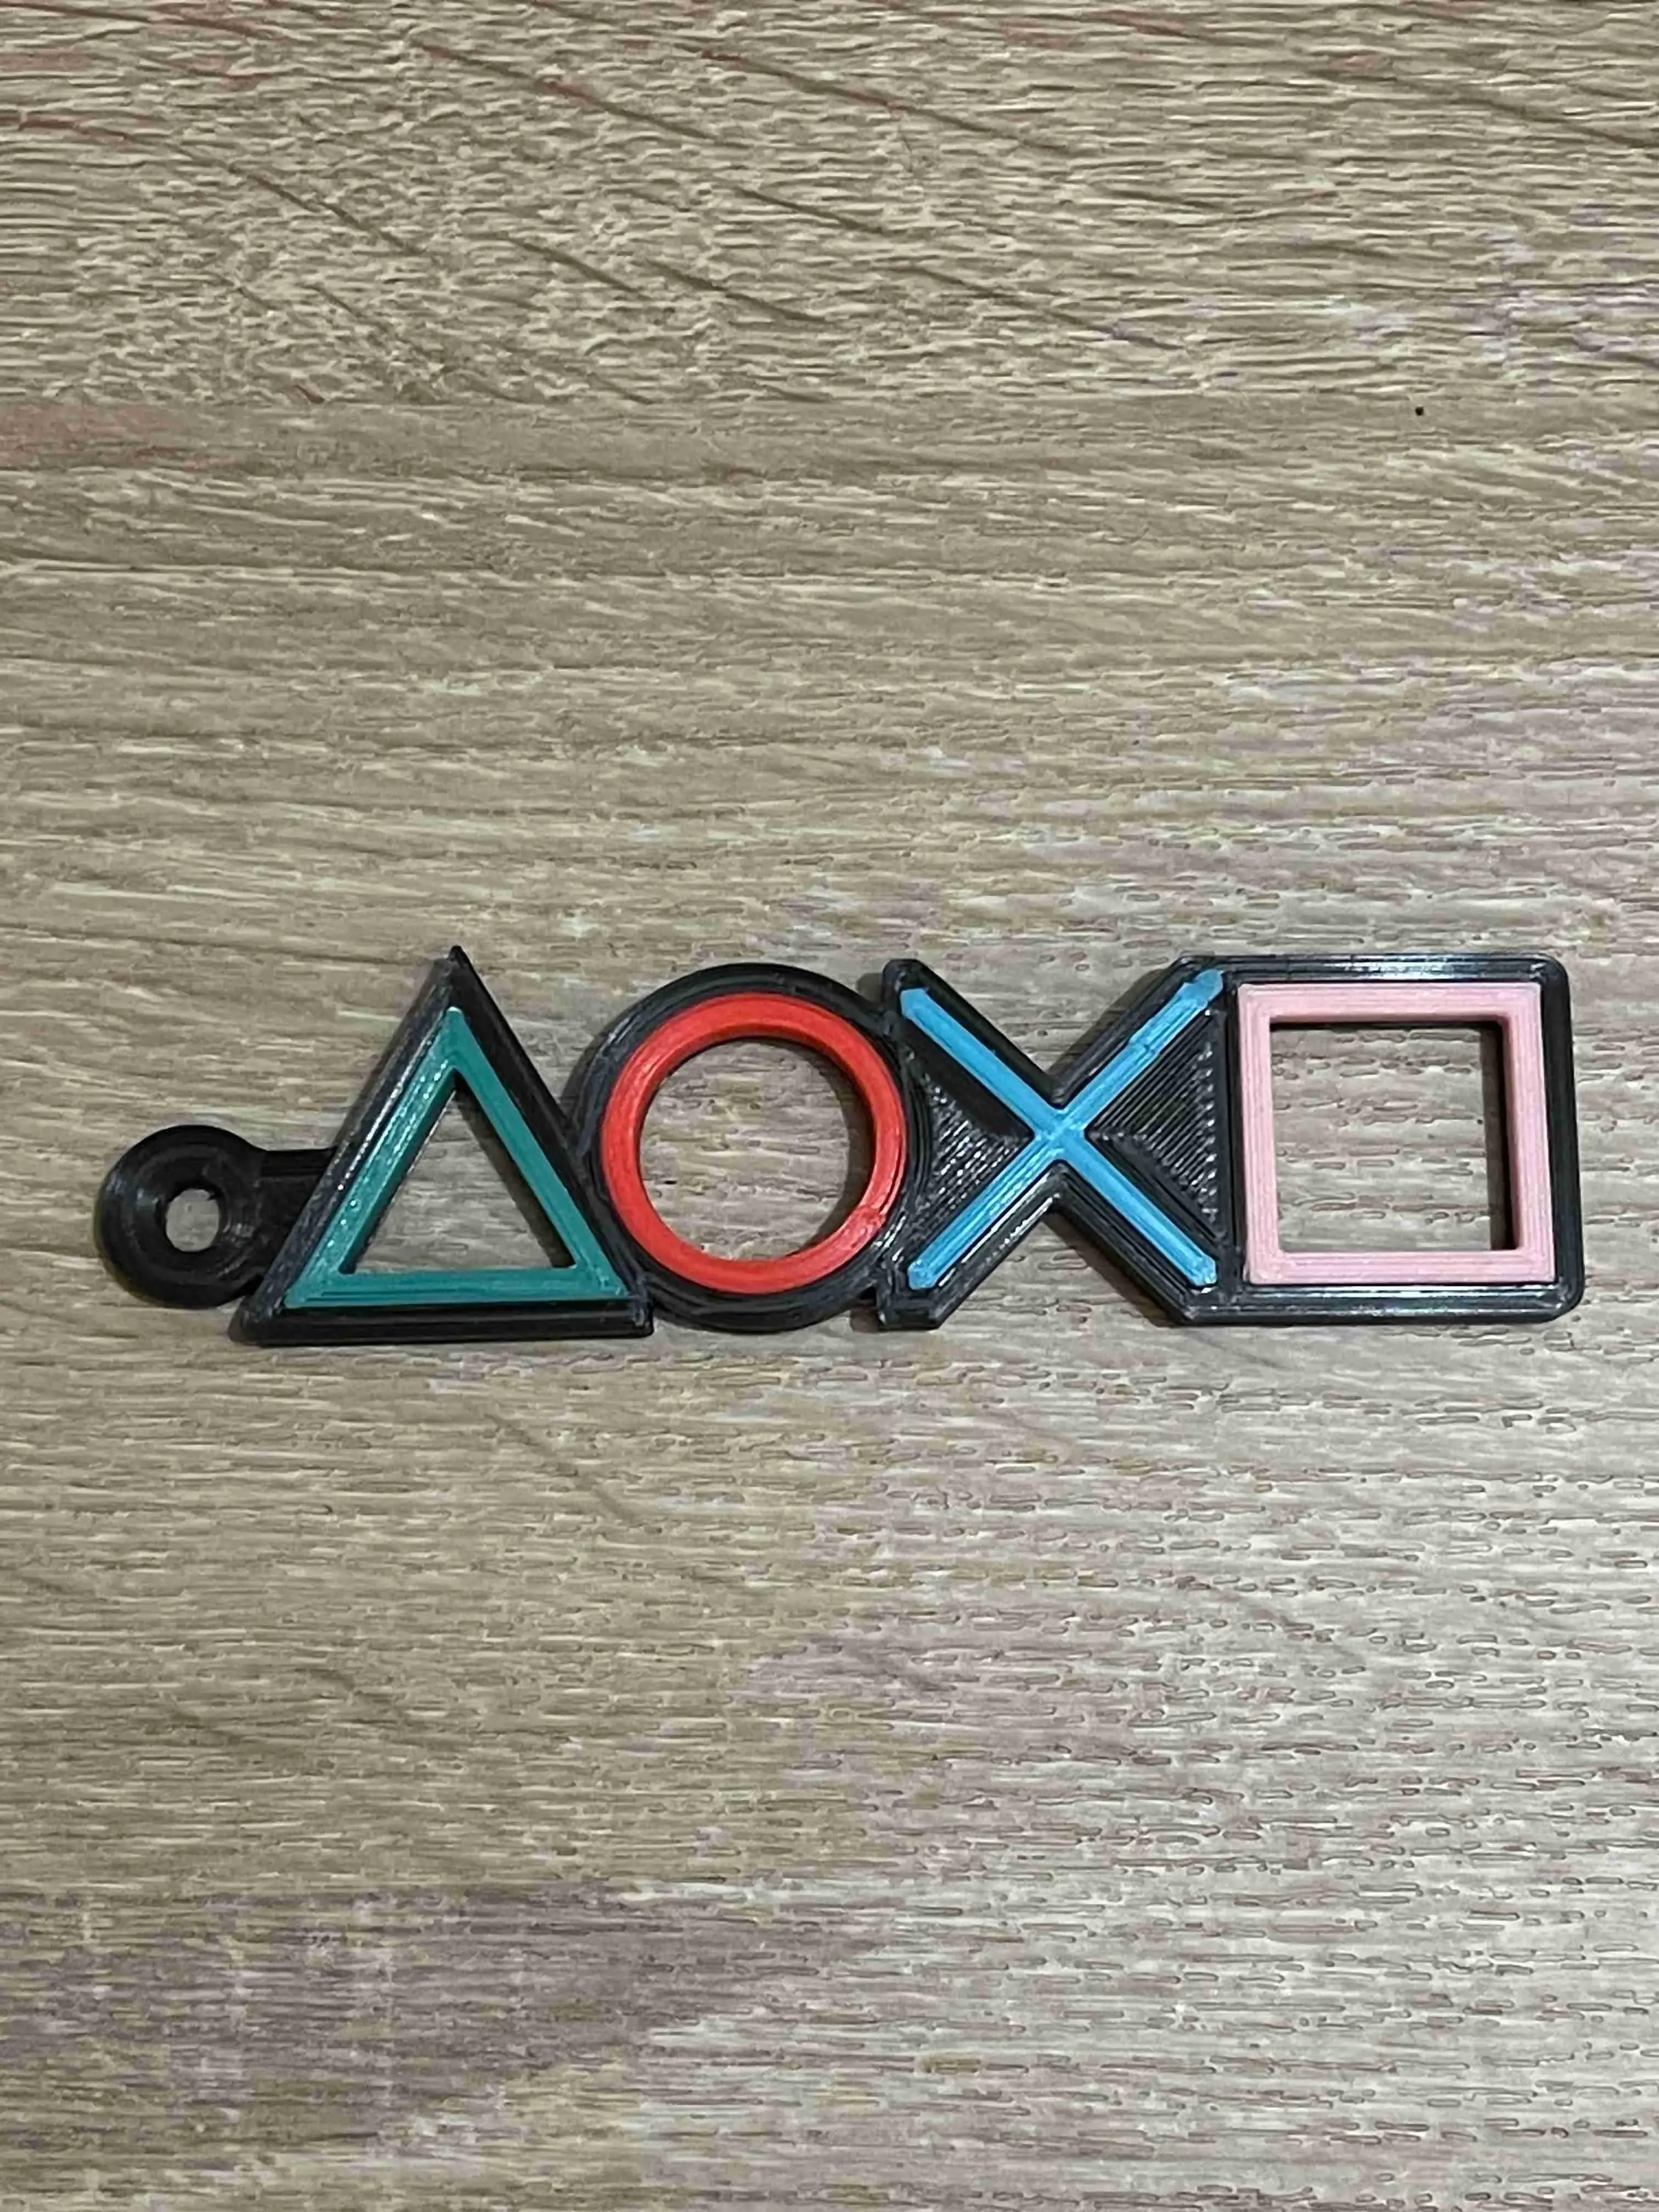 Porte clé Playstation ( Playstation keys holder )